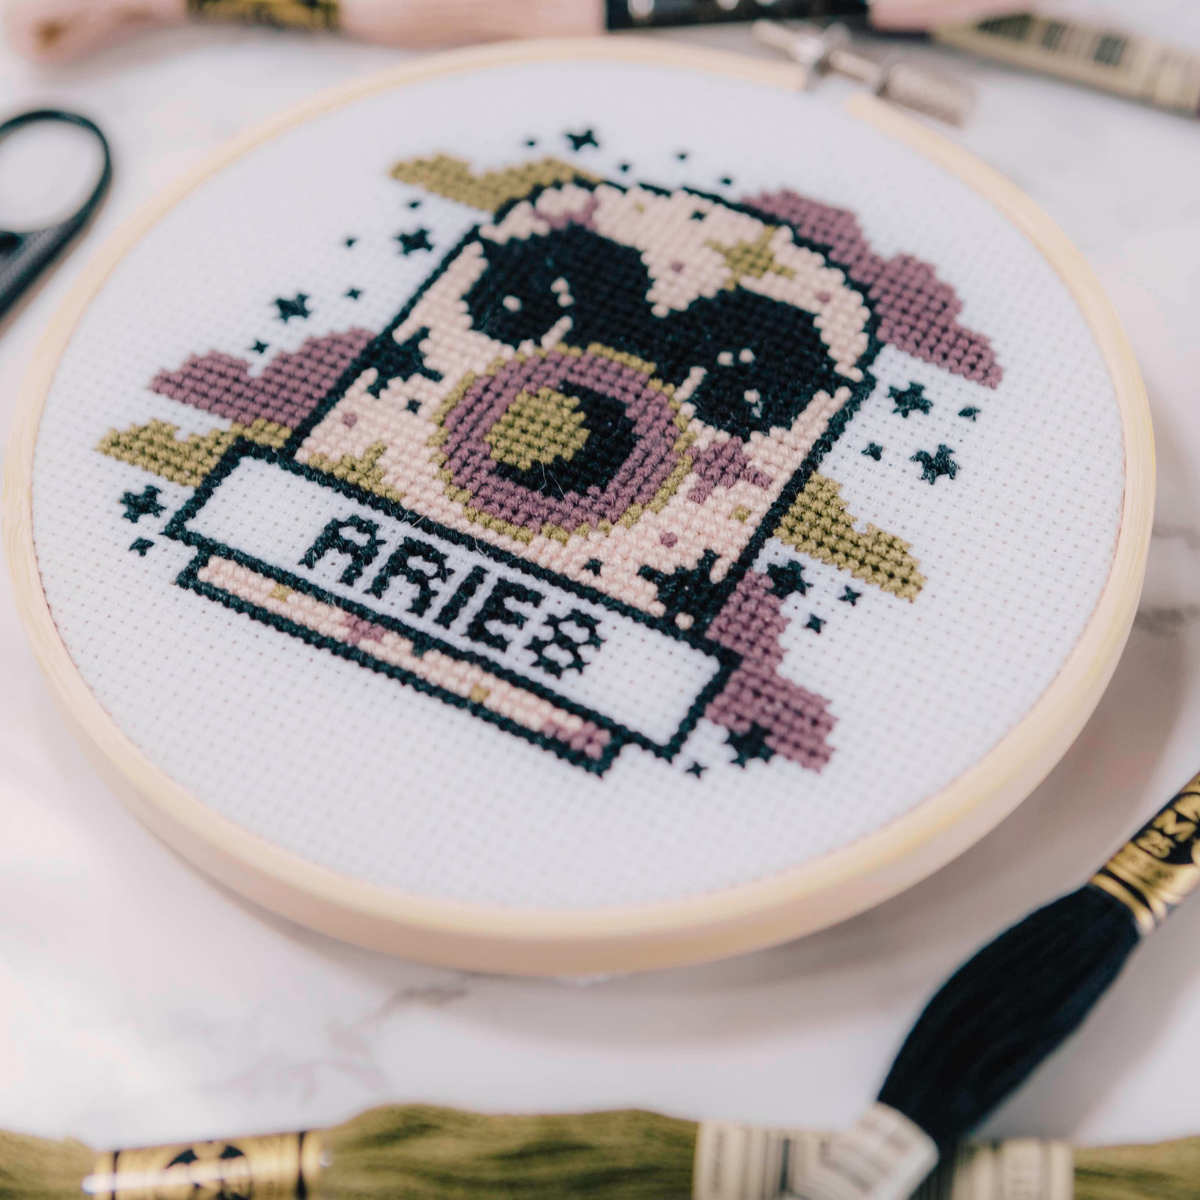 'Aries' Zodiac Star Sign Cross Stitch Kit